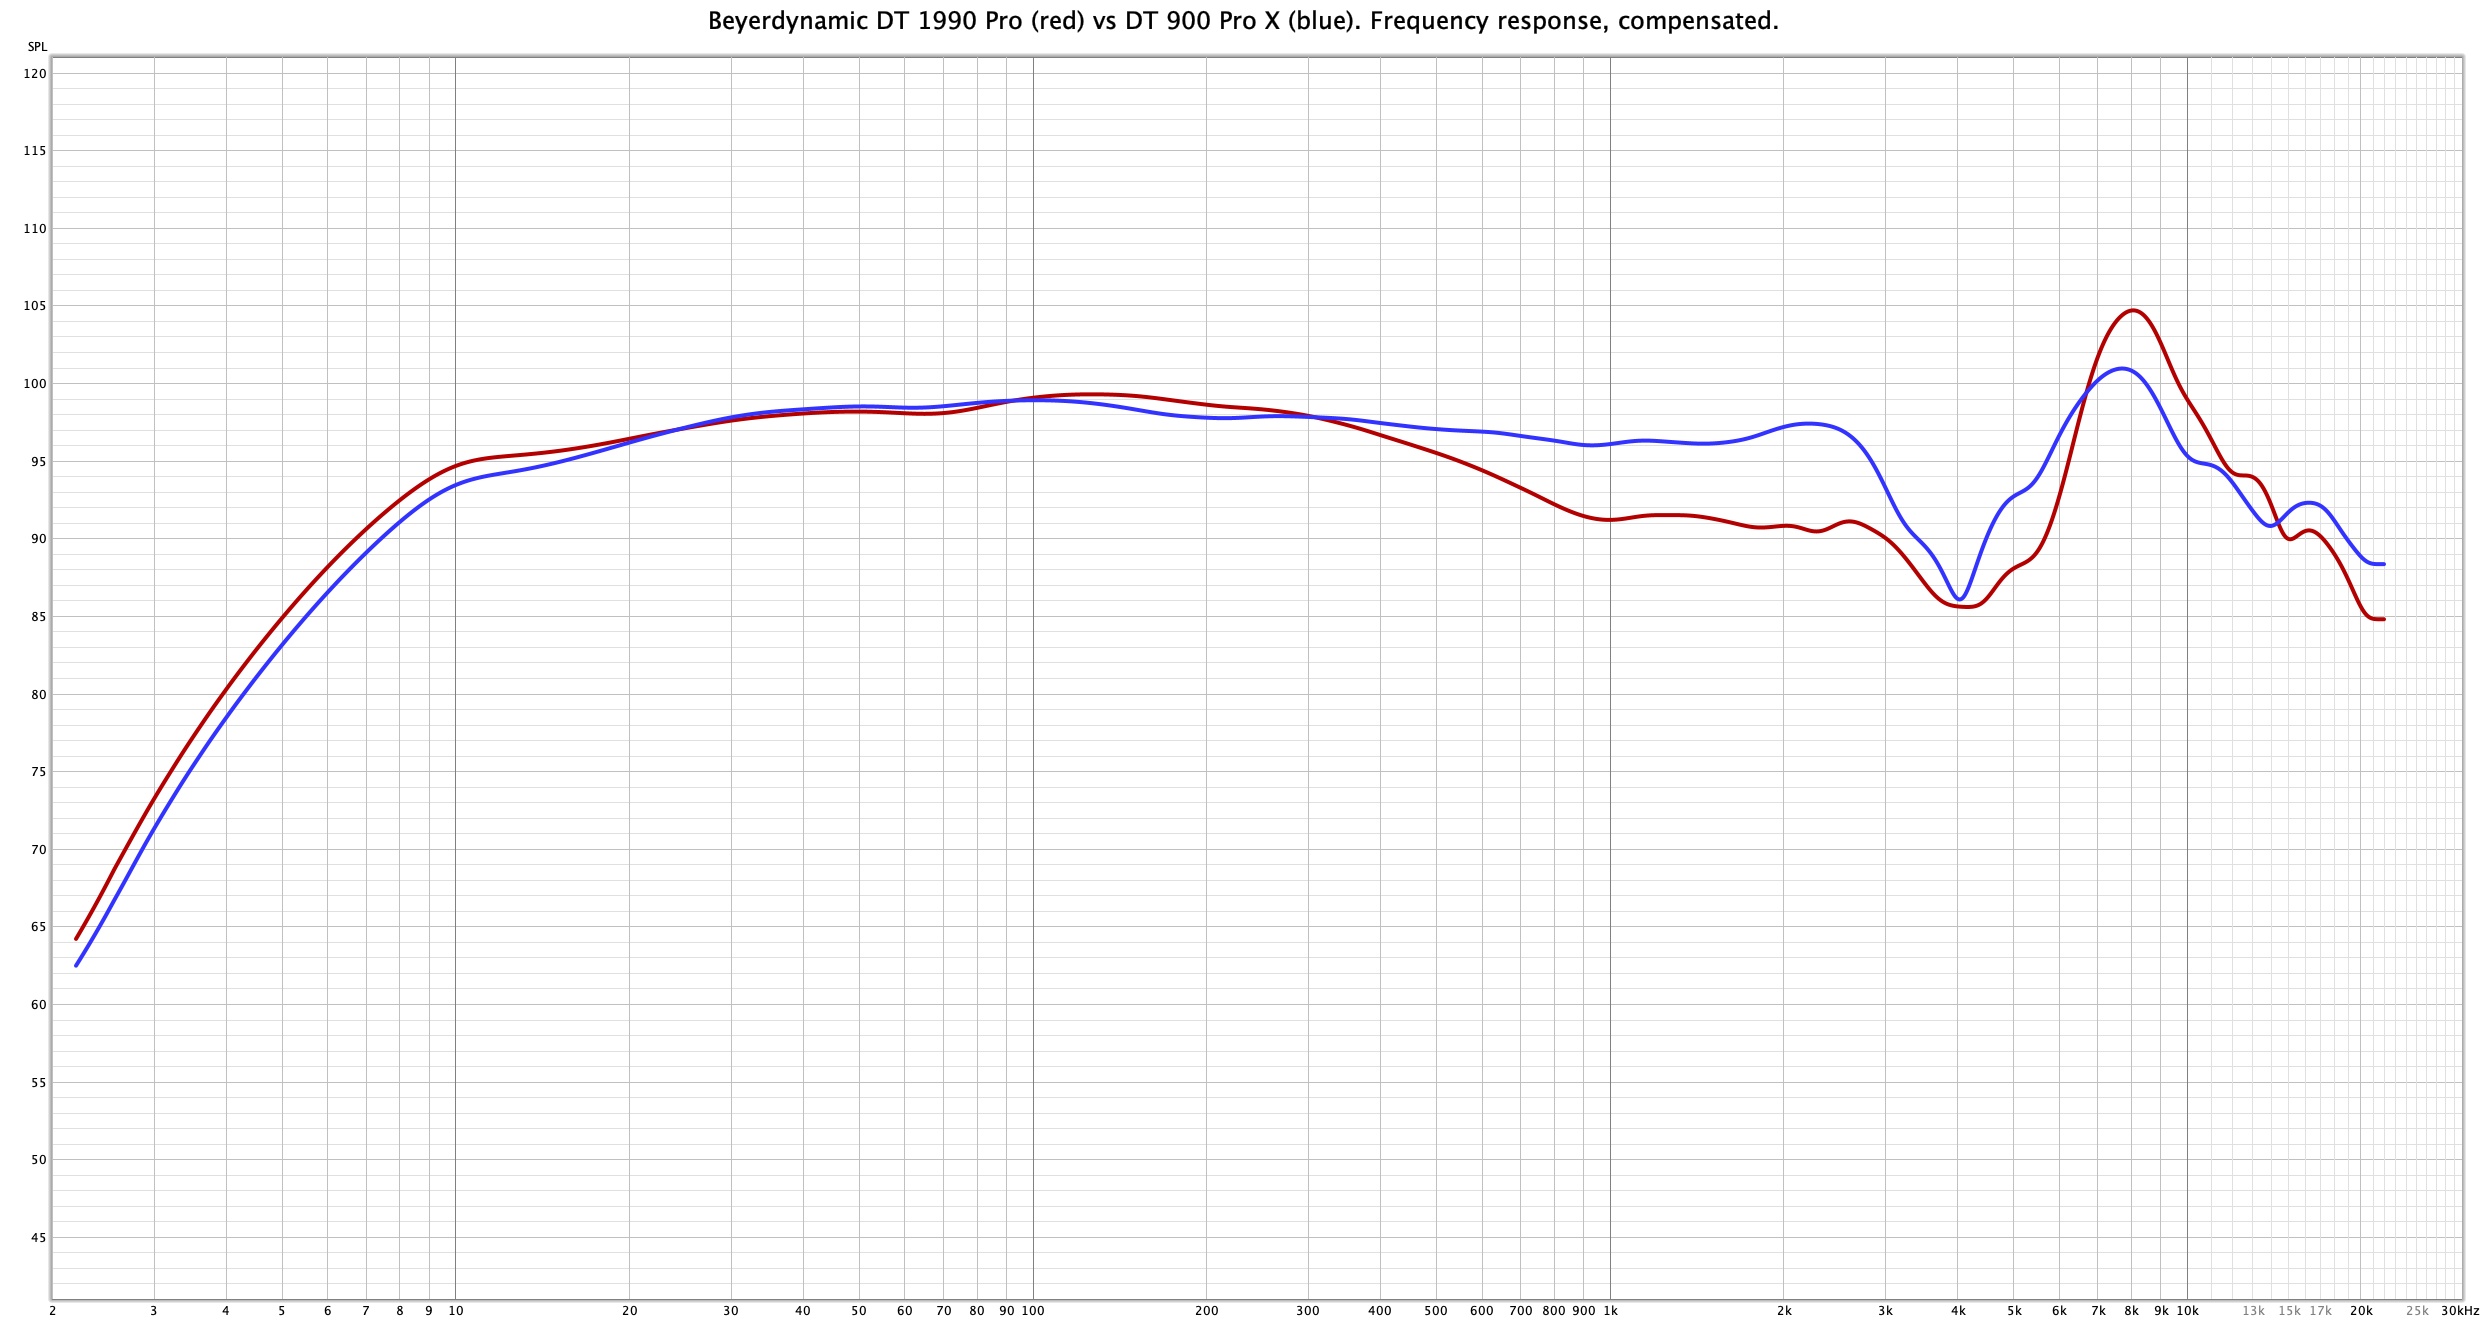 Beyerdynamic DT 900 Pro X vs DT 1990 Pro frequency